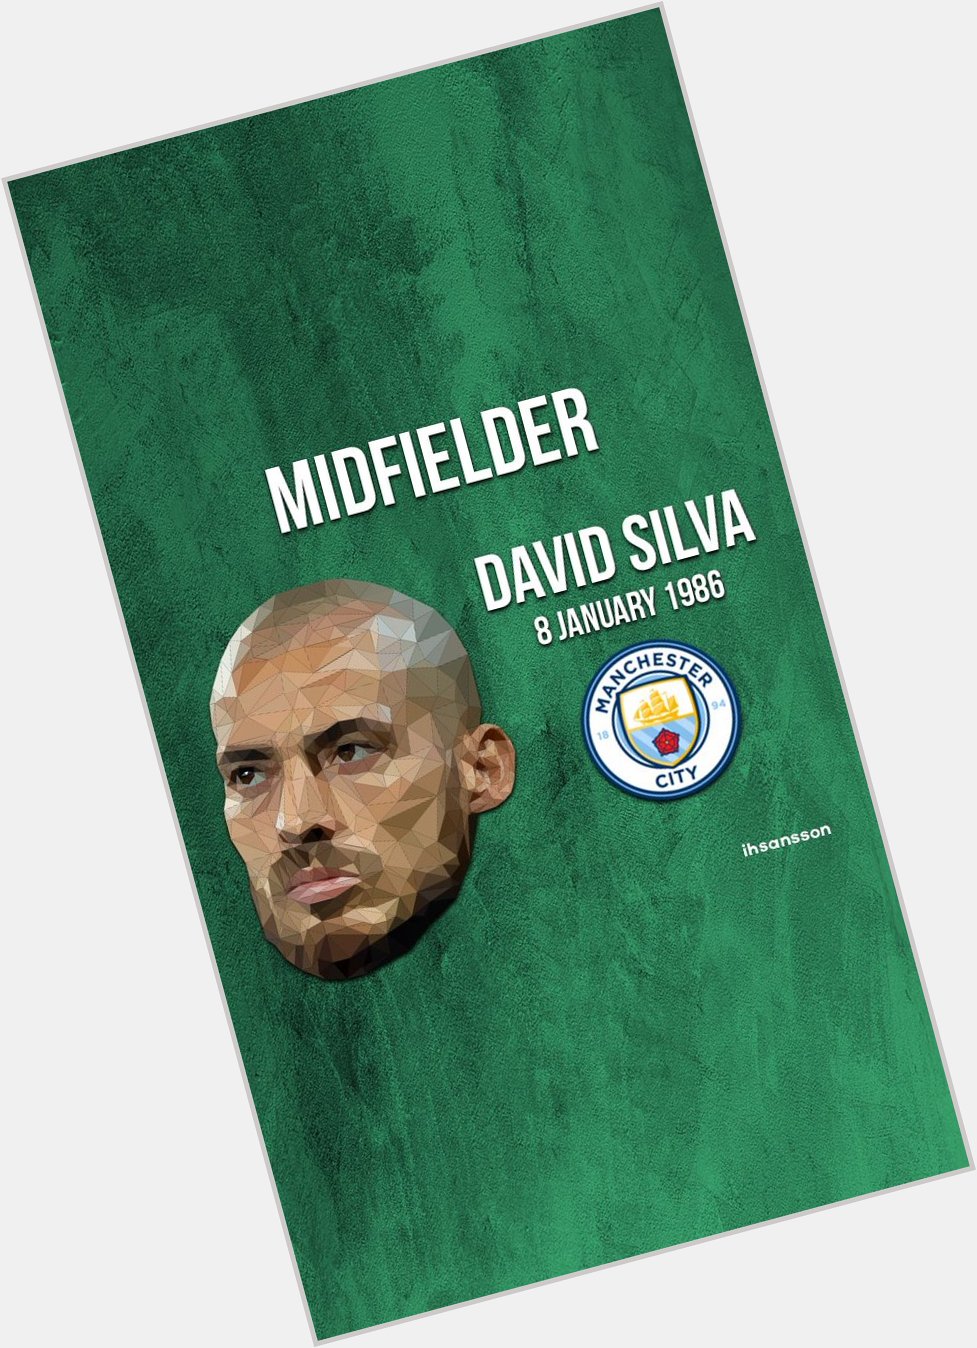 MIDFIELDER
David Silva - Manchester City

Happy Birthday !   RT/Likes for appreciated 